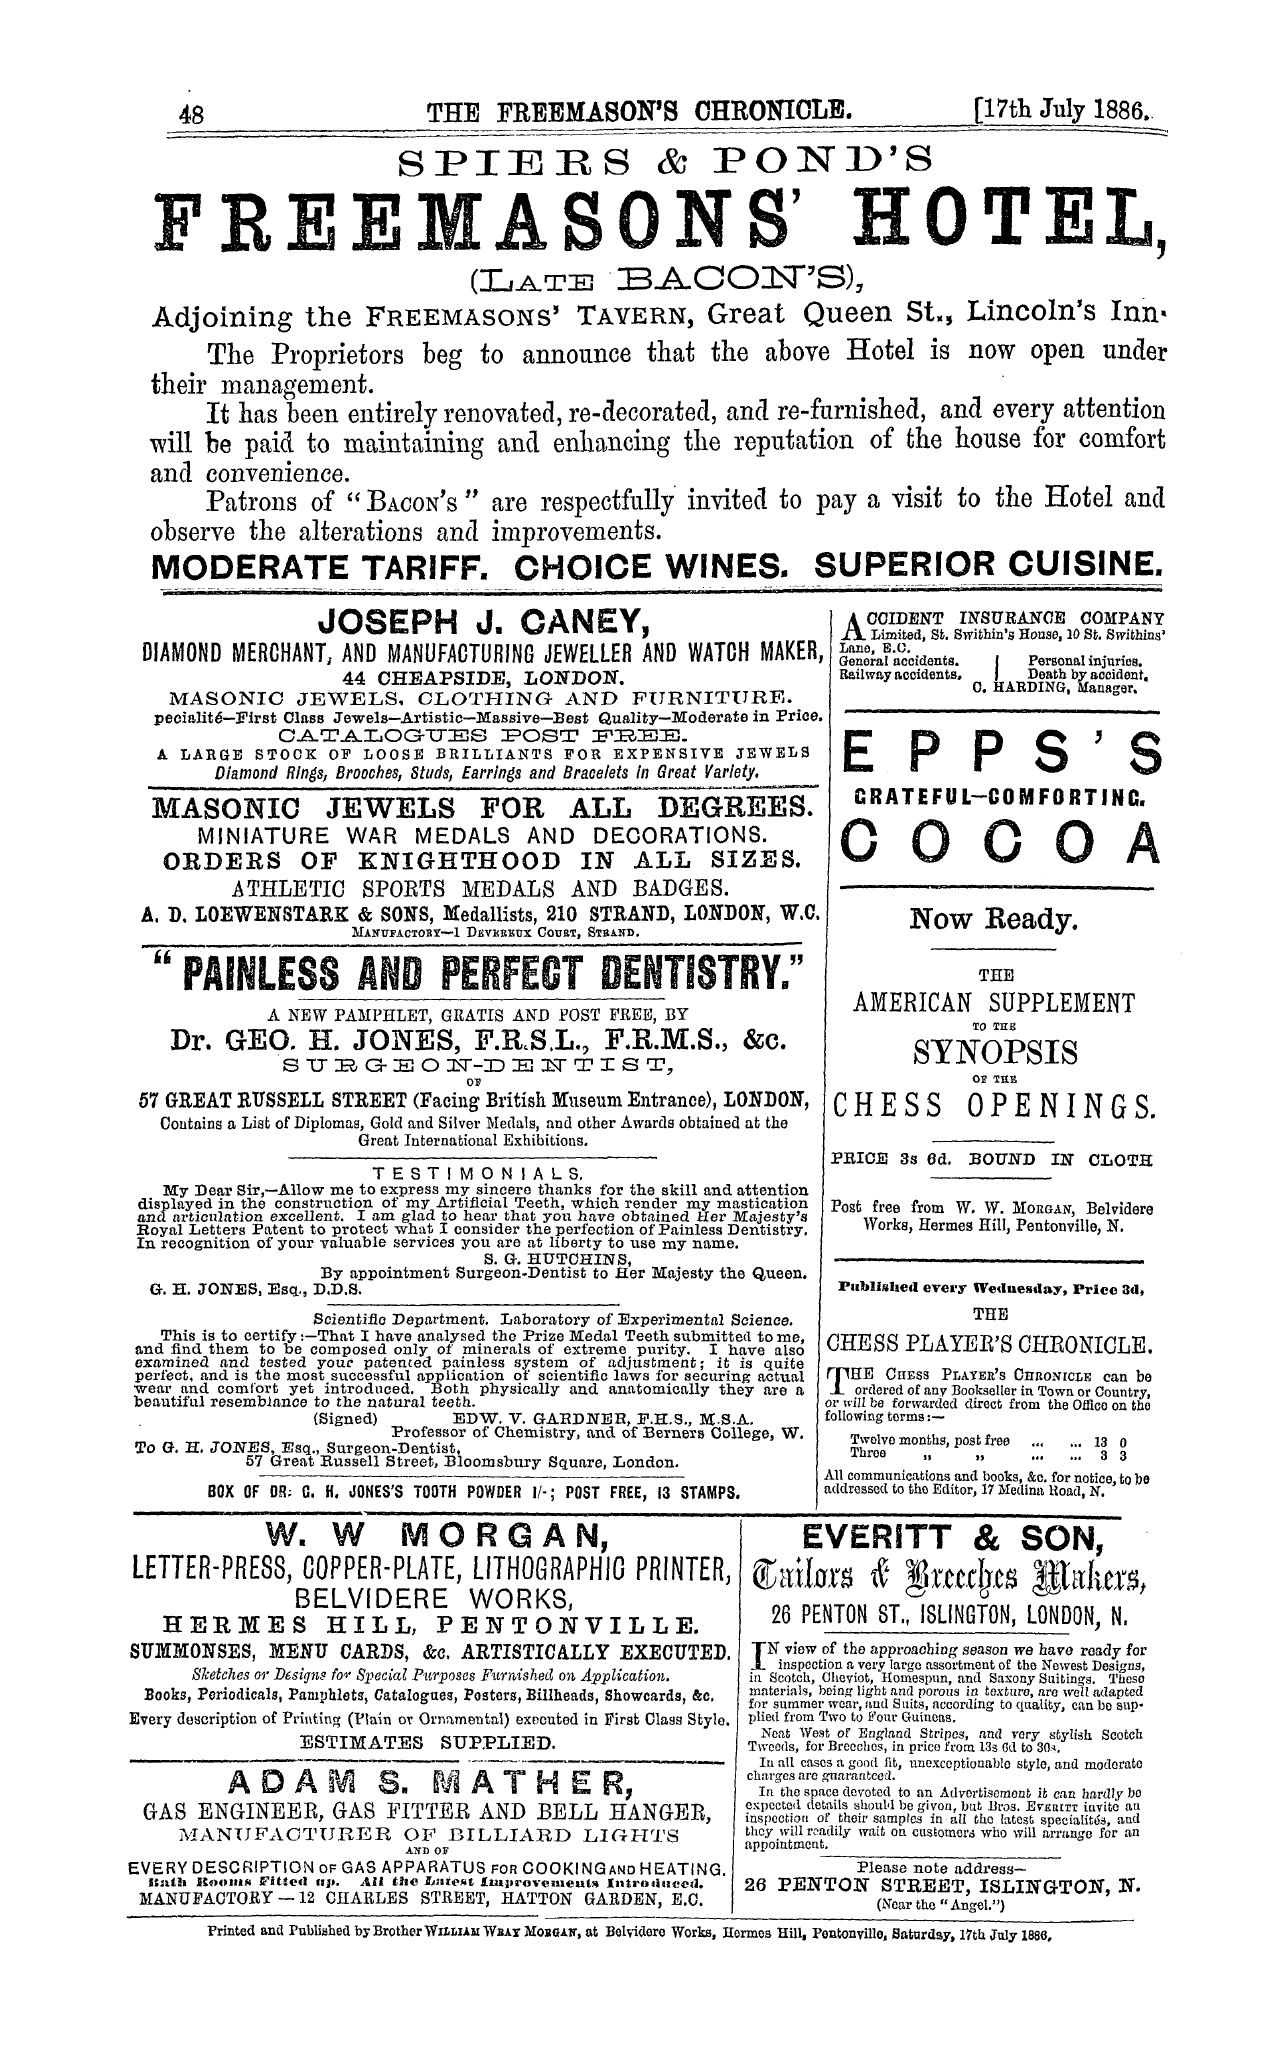 The Freemason's Chronicle: 1886-07-17 - Ad01602